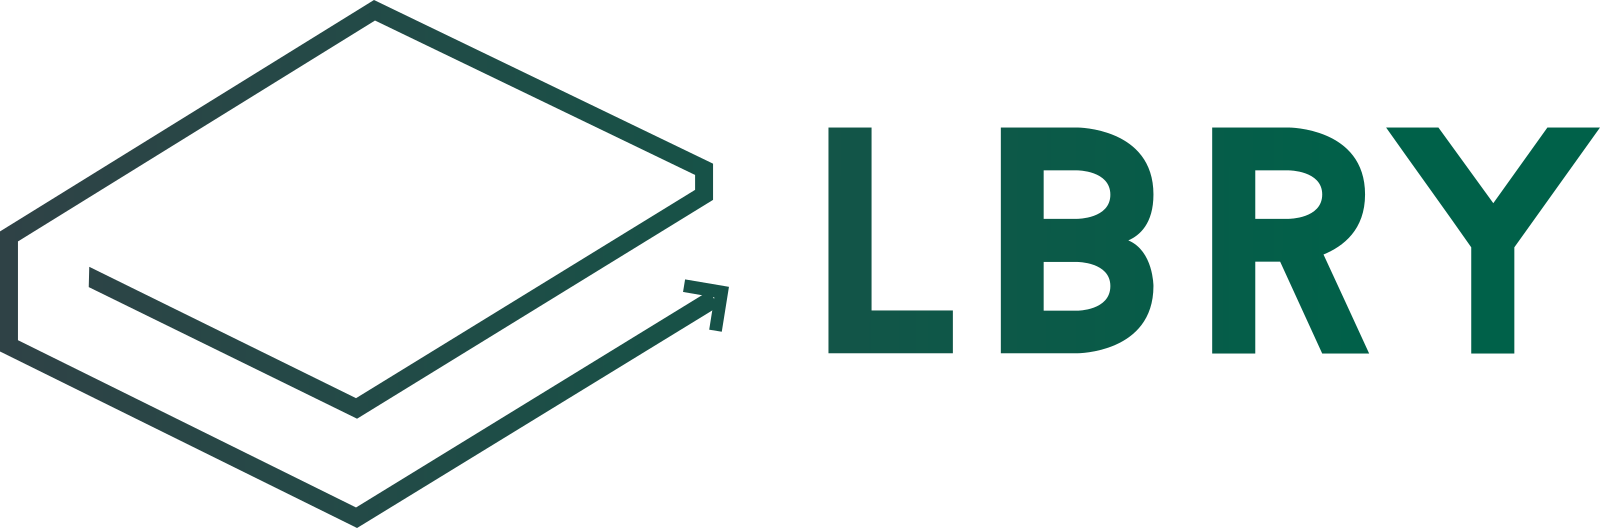 Figure 1: LBRY Logo